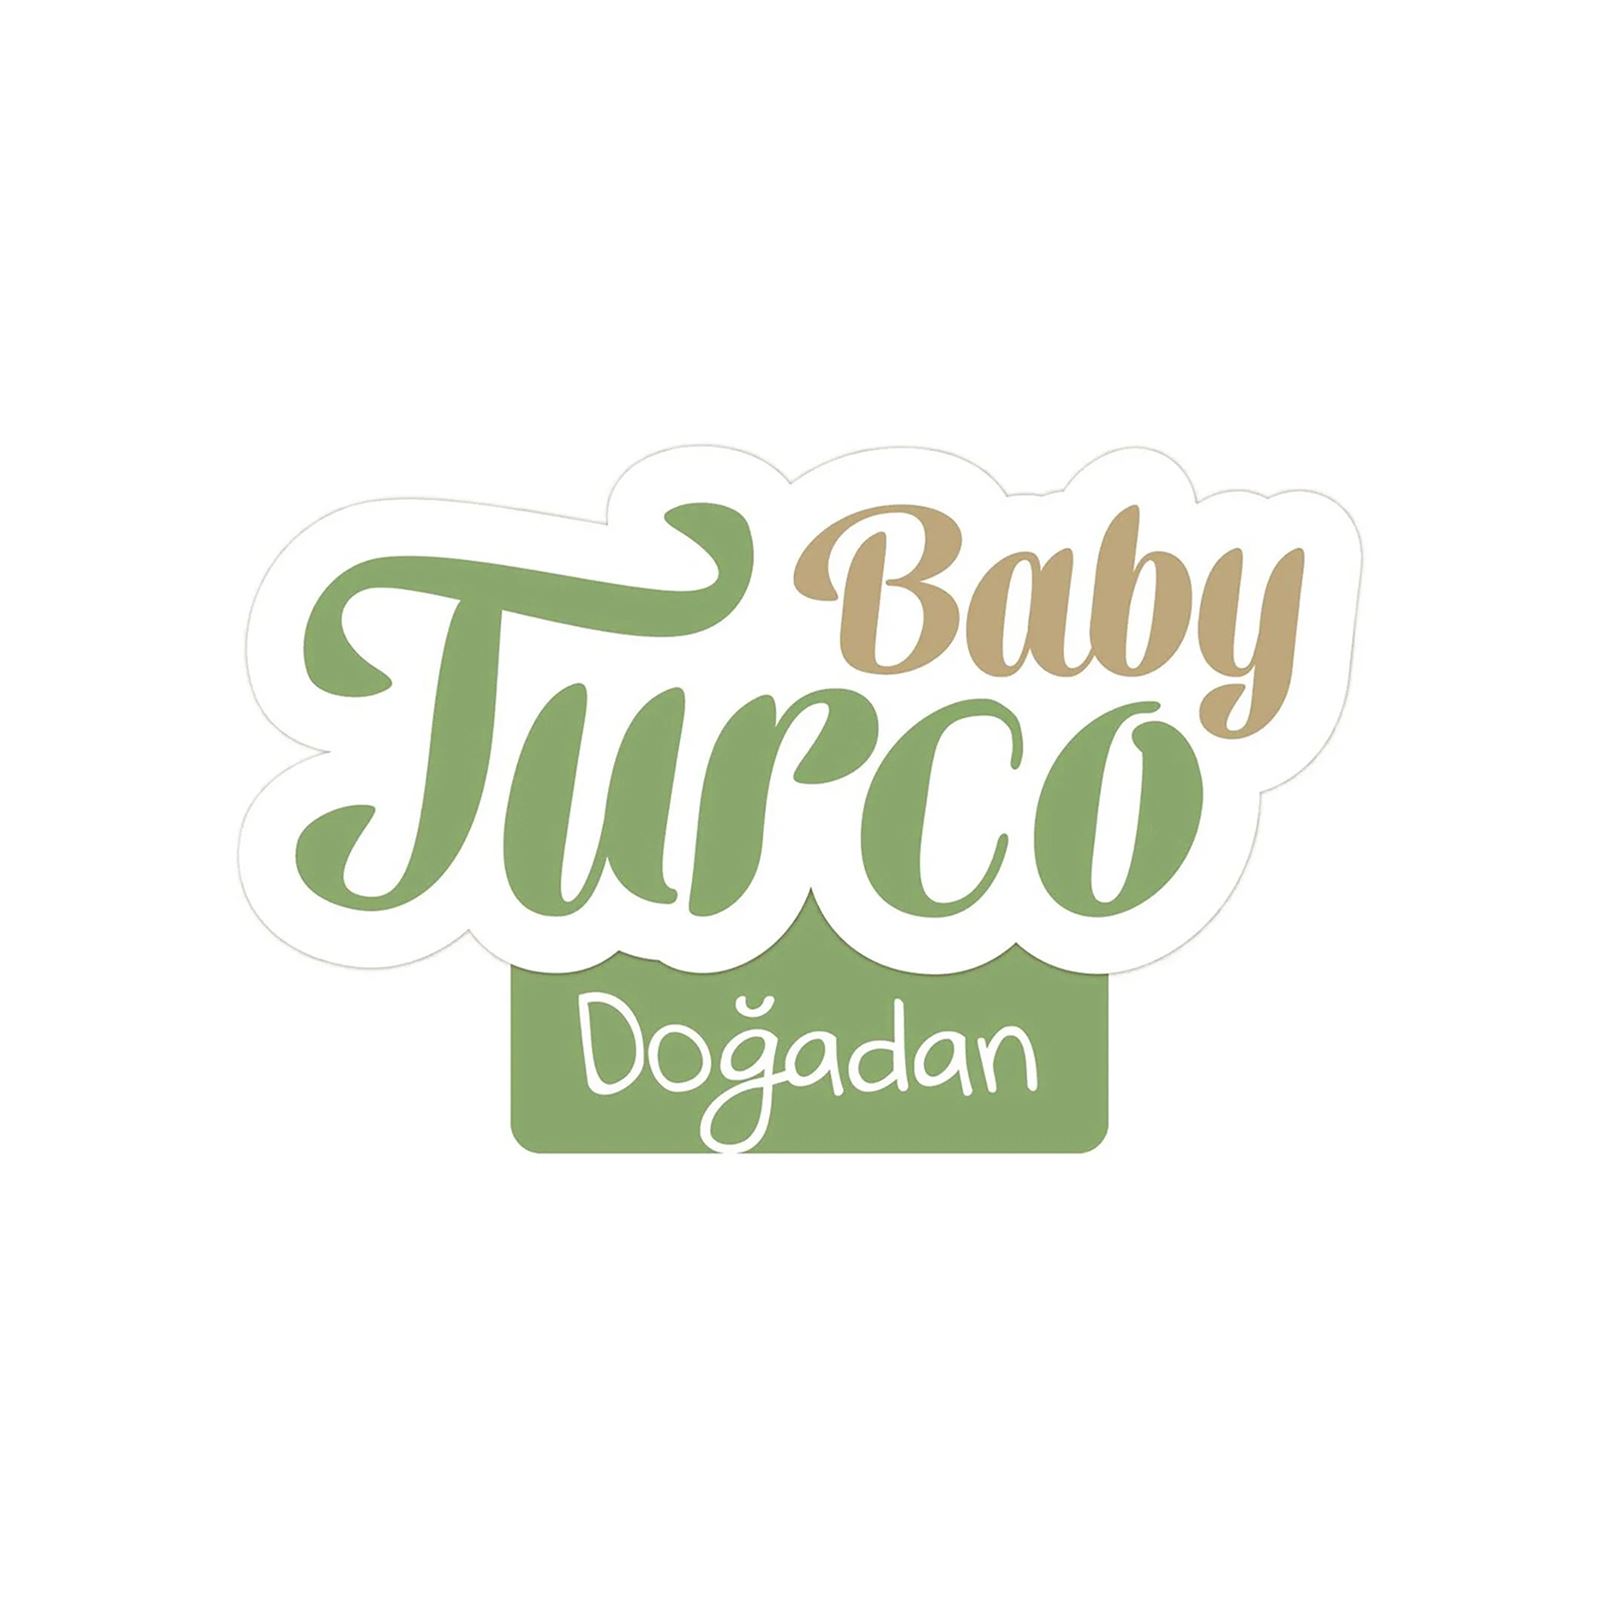 Baby Turco Doğadan Bebek Bezi 4 Beden Ultra Maxi 104 Adet